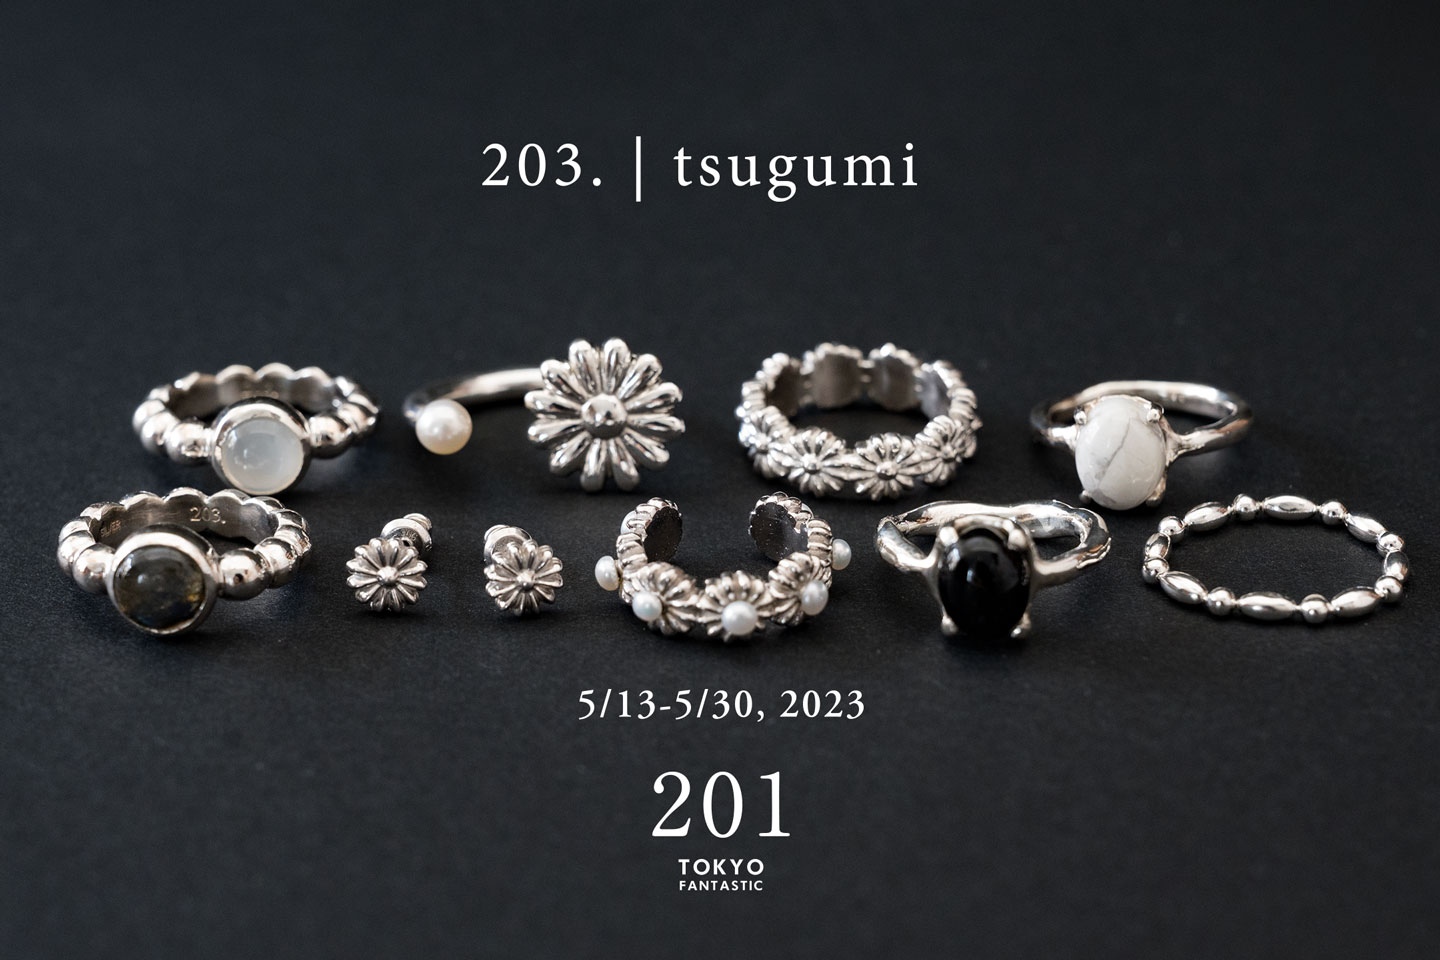 203. | tsugumi ポップアップ（シルバージュエリー）5/13-5/30, 2023【TOKYO FANTASTIC 201】